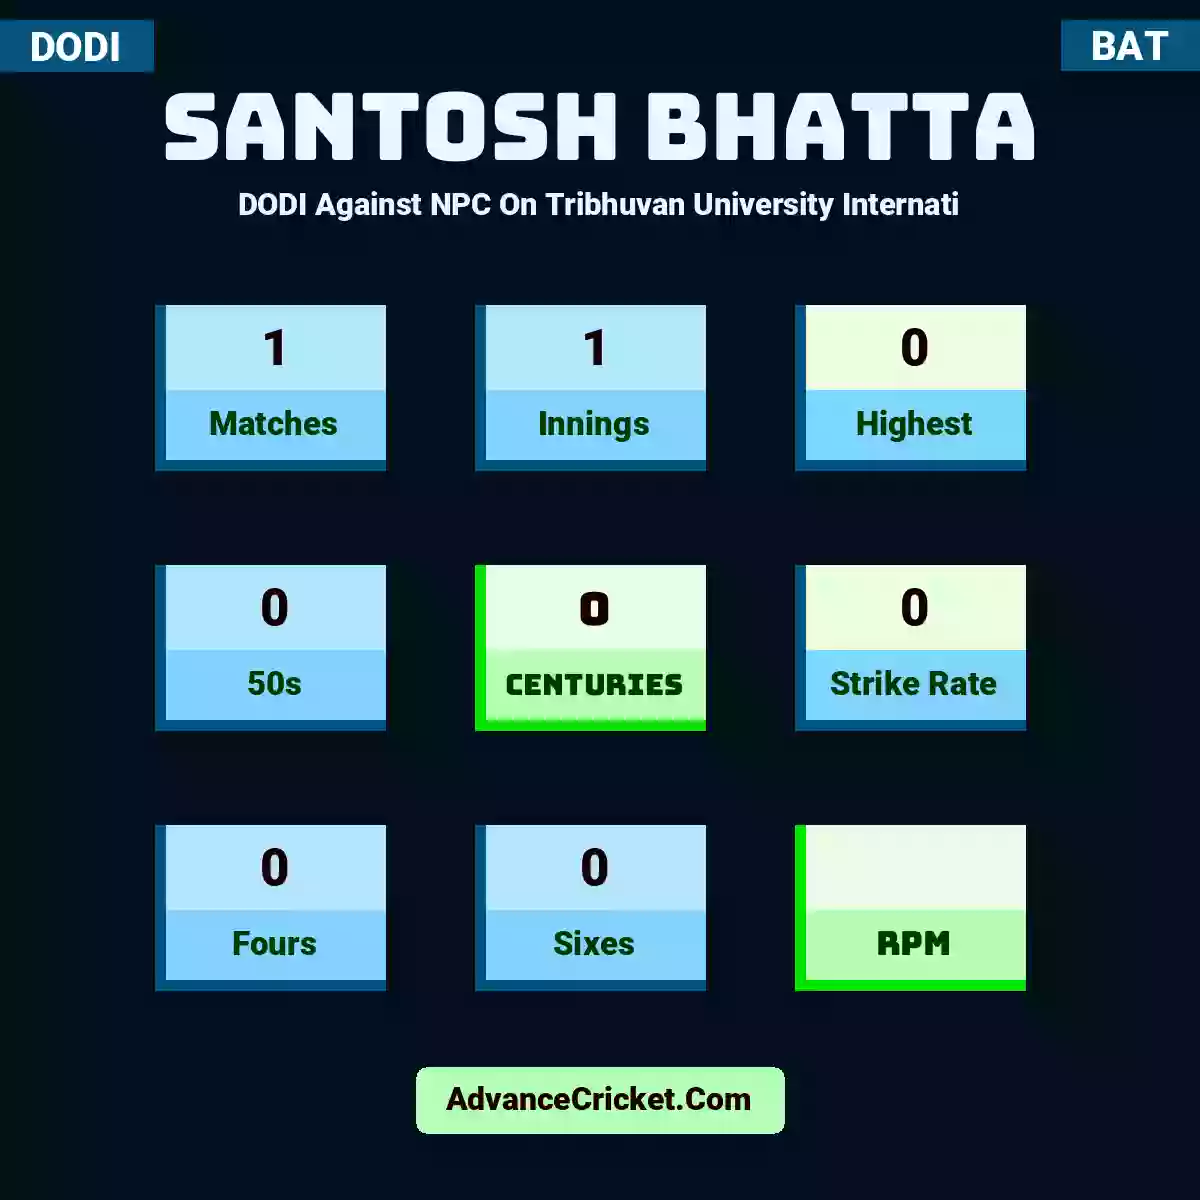 Santosh Bhatta DODI  Against NPC On Tribhuvan University Internati, Santosh Bhatta played 1 matches, scored 0 runs as highest, 0 half-centuries, and 0 centuries, with a strike rate of 0. S.Bhatta hit 0 fours and 0 sixes.